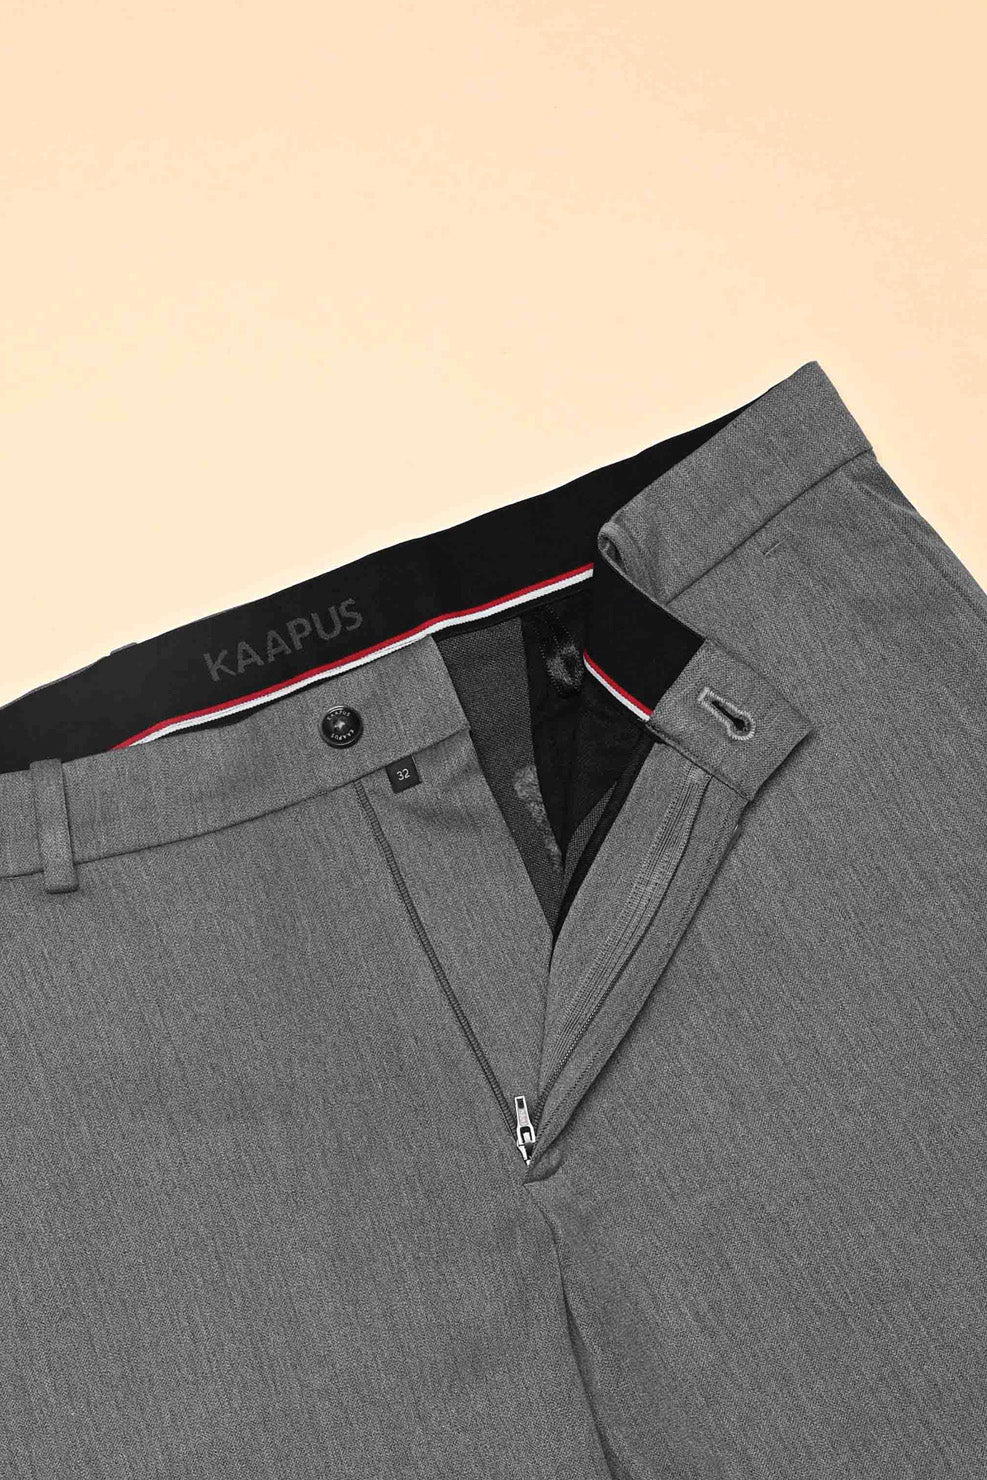 Grey 4-Way Stretch Flex Pro Pants